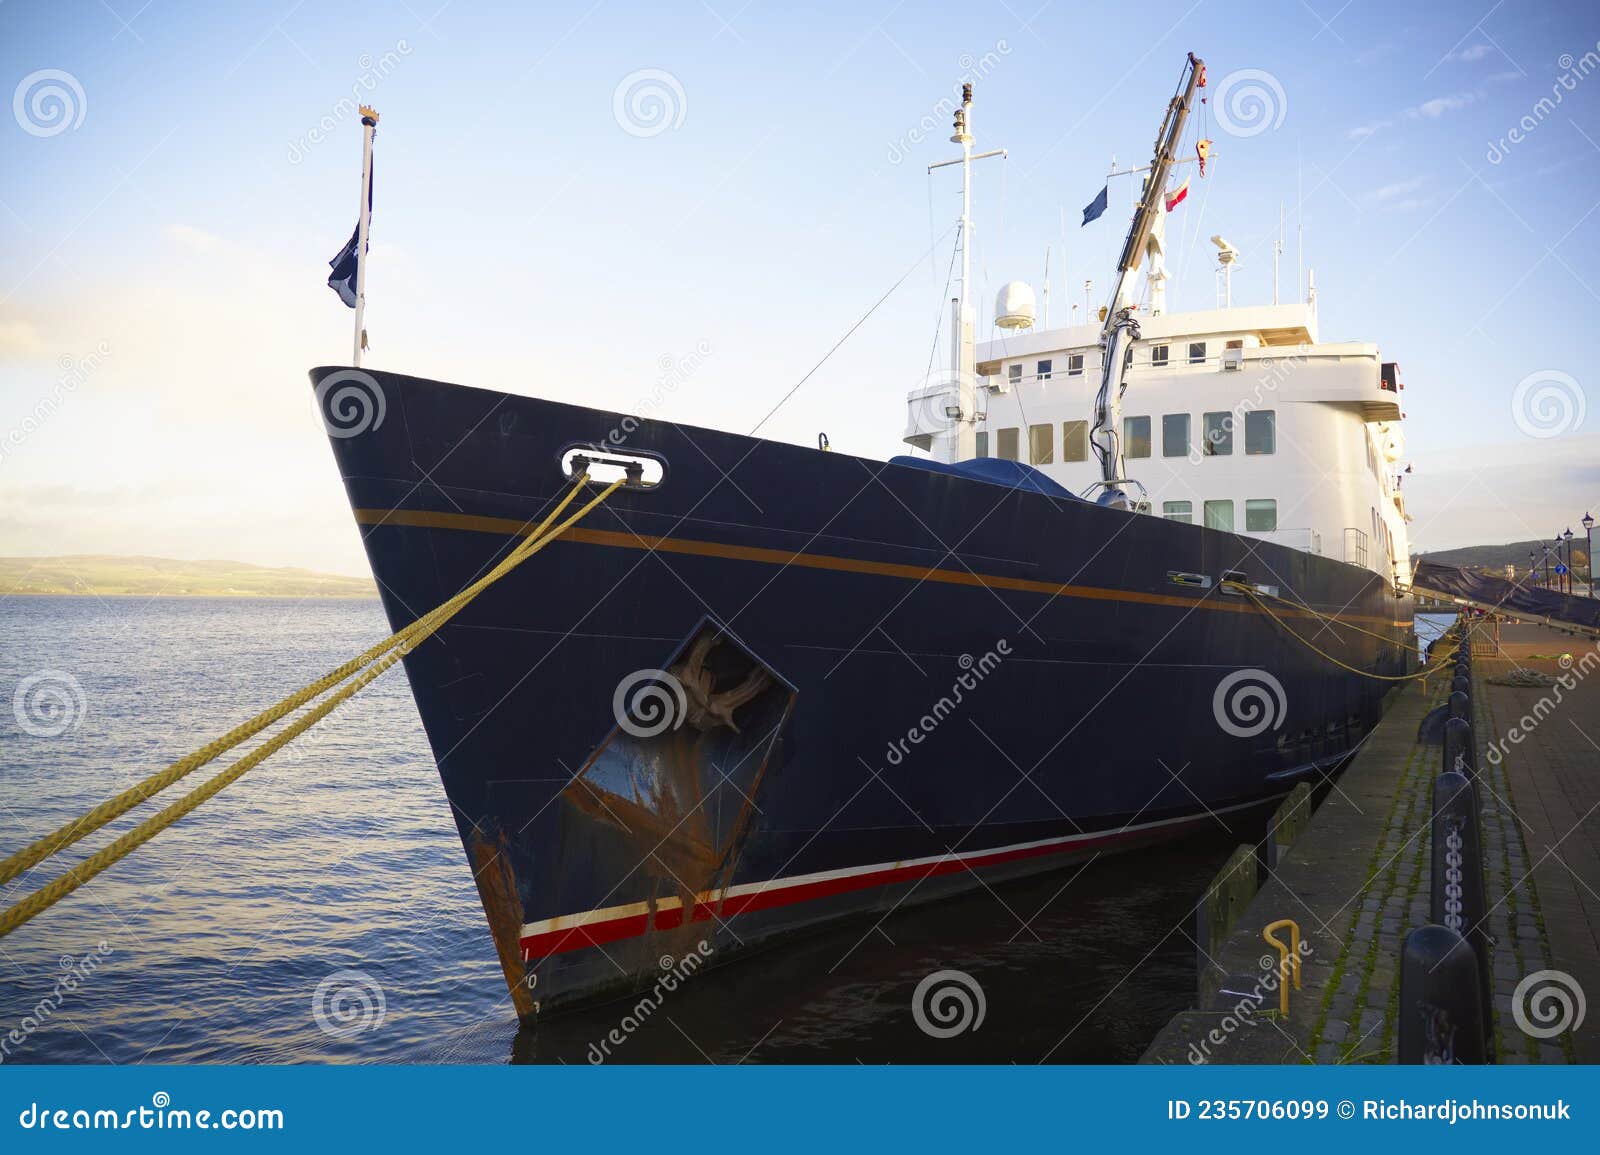 https://thumbs.dreamstime.com/z/ship-anchor-line-rope-tied-to-sea-port-greenock-uk-235706099.jpg